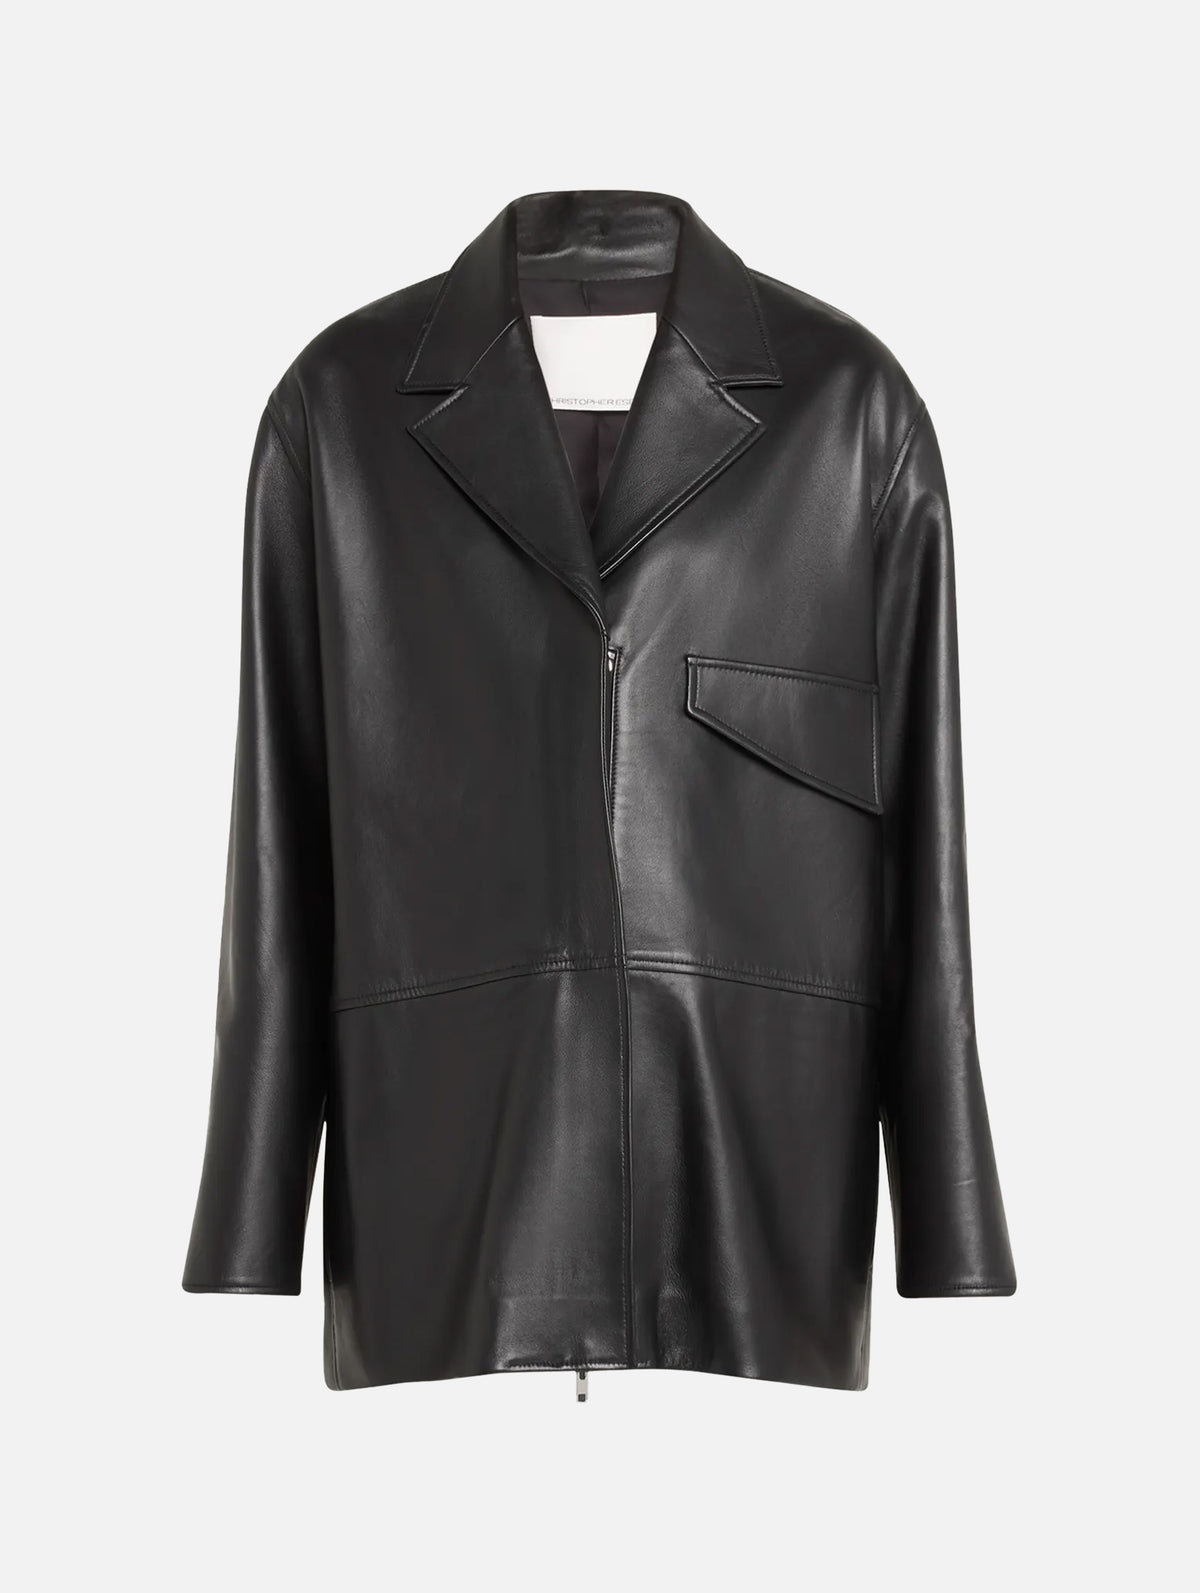 Charli Leather Jacket in Black